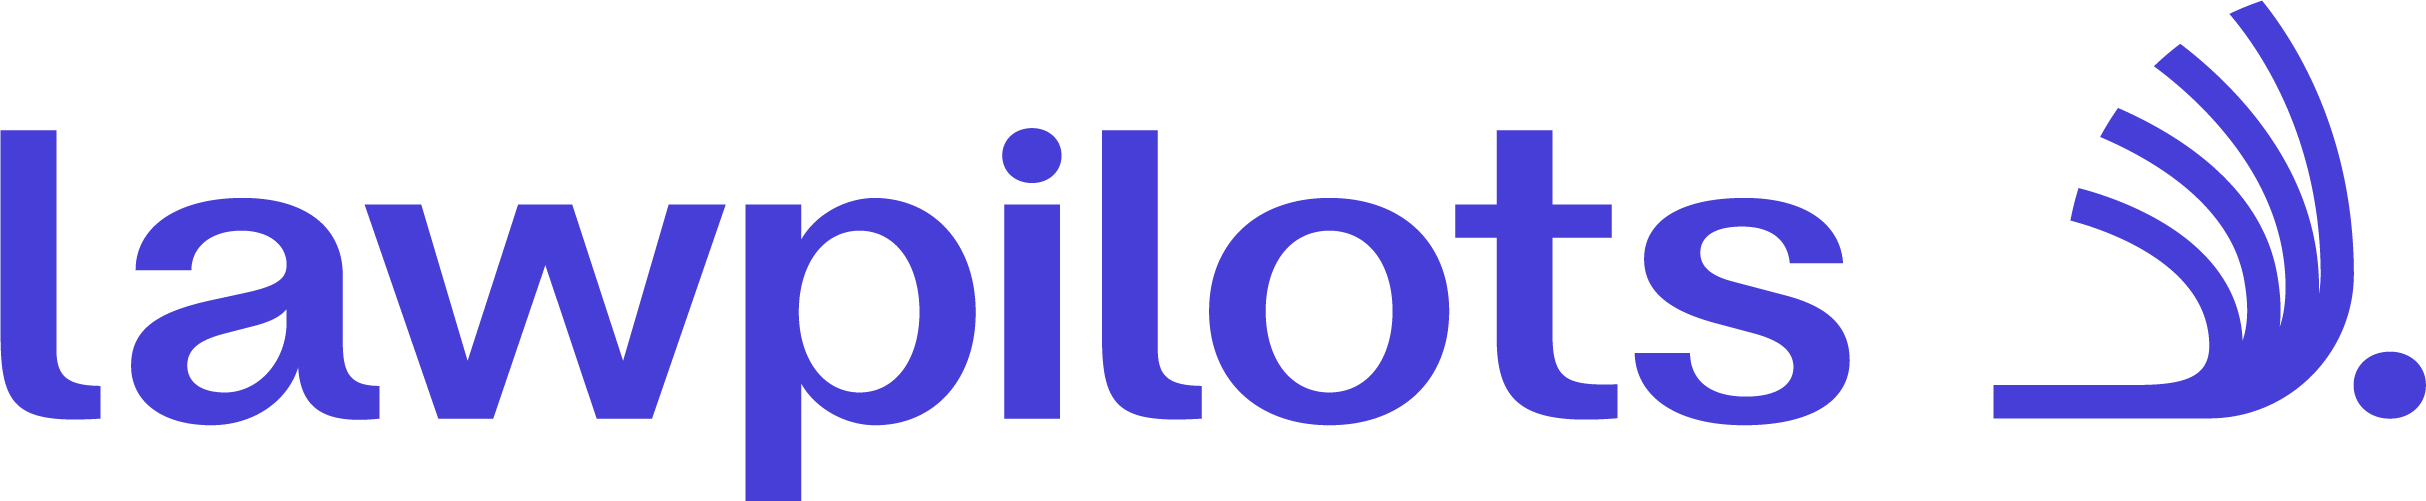 lawpilots Logo